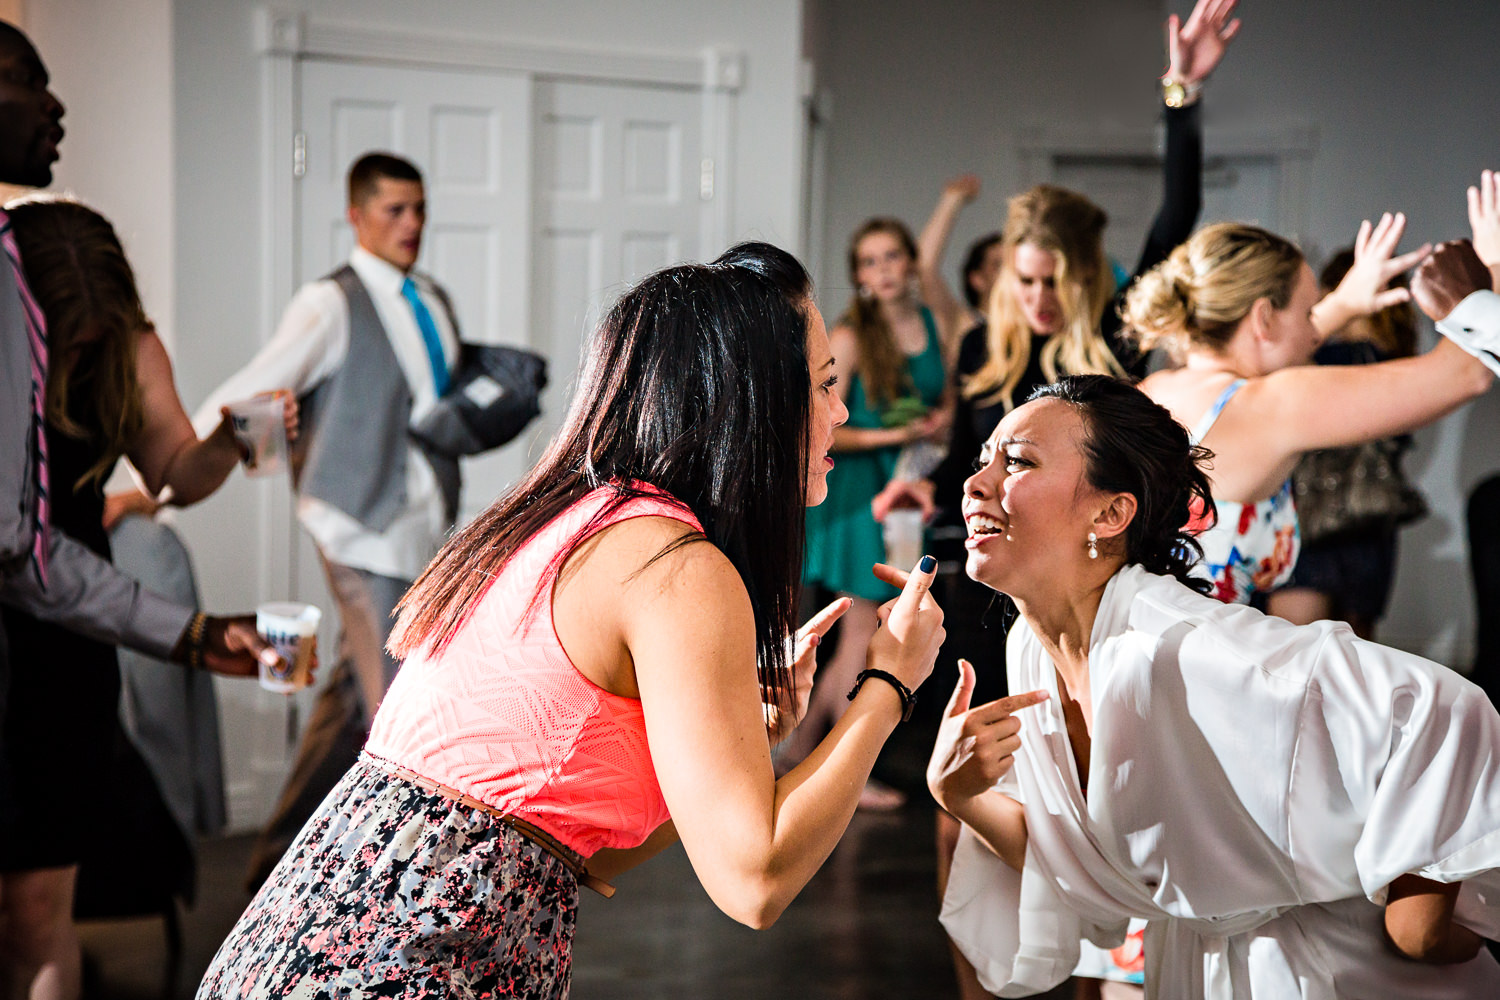 billings-montana-chanceys-wedding-reception-bride-dancing-with-guests.jpg